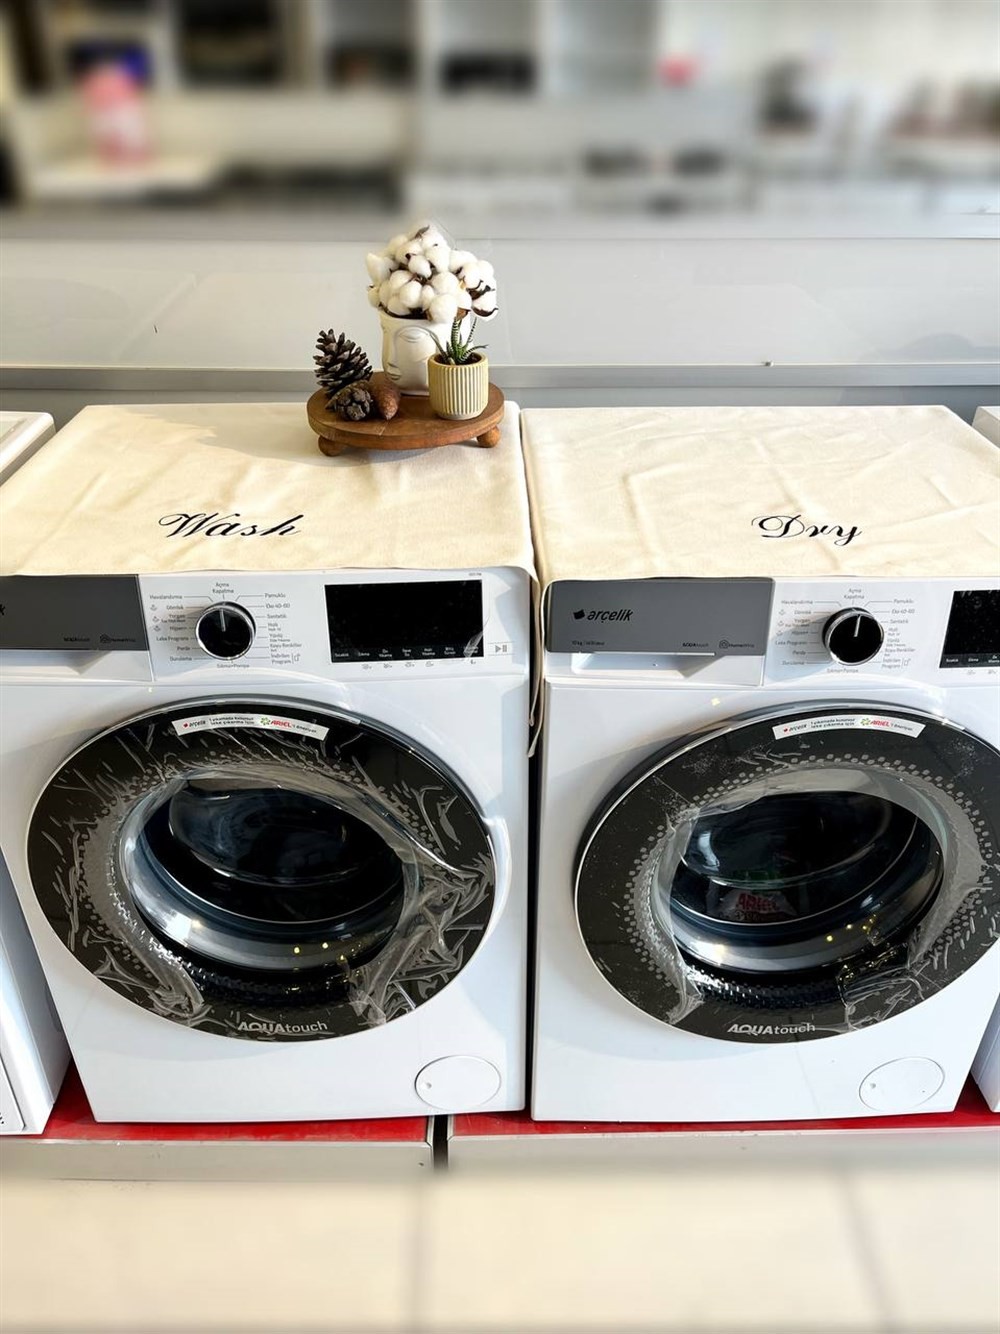 Atölye No 35 Wash Çamaşır Makinesi Örtüsü & Dry Çamaşır Kurutma Makinesi Örtüsü 2'li Set Krem